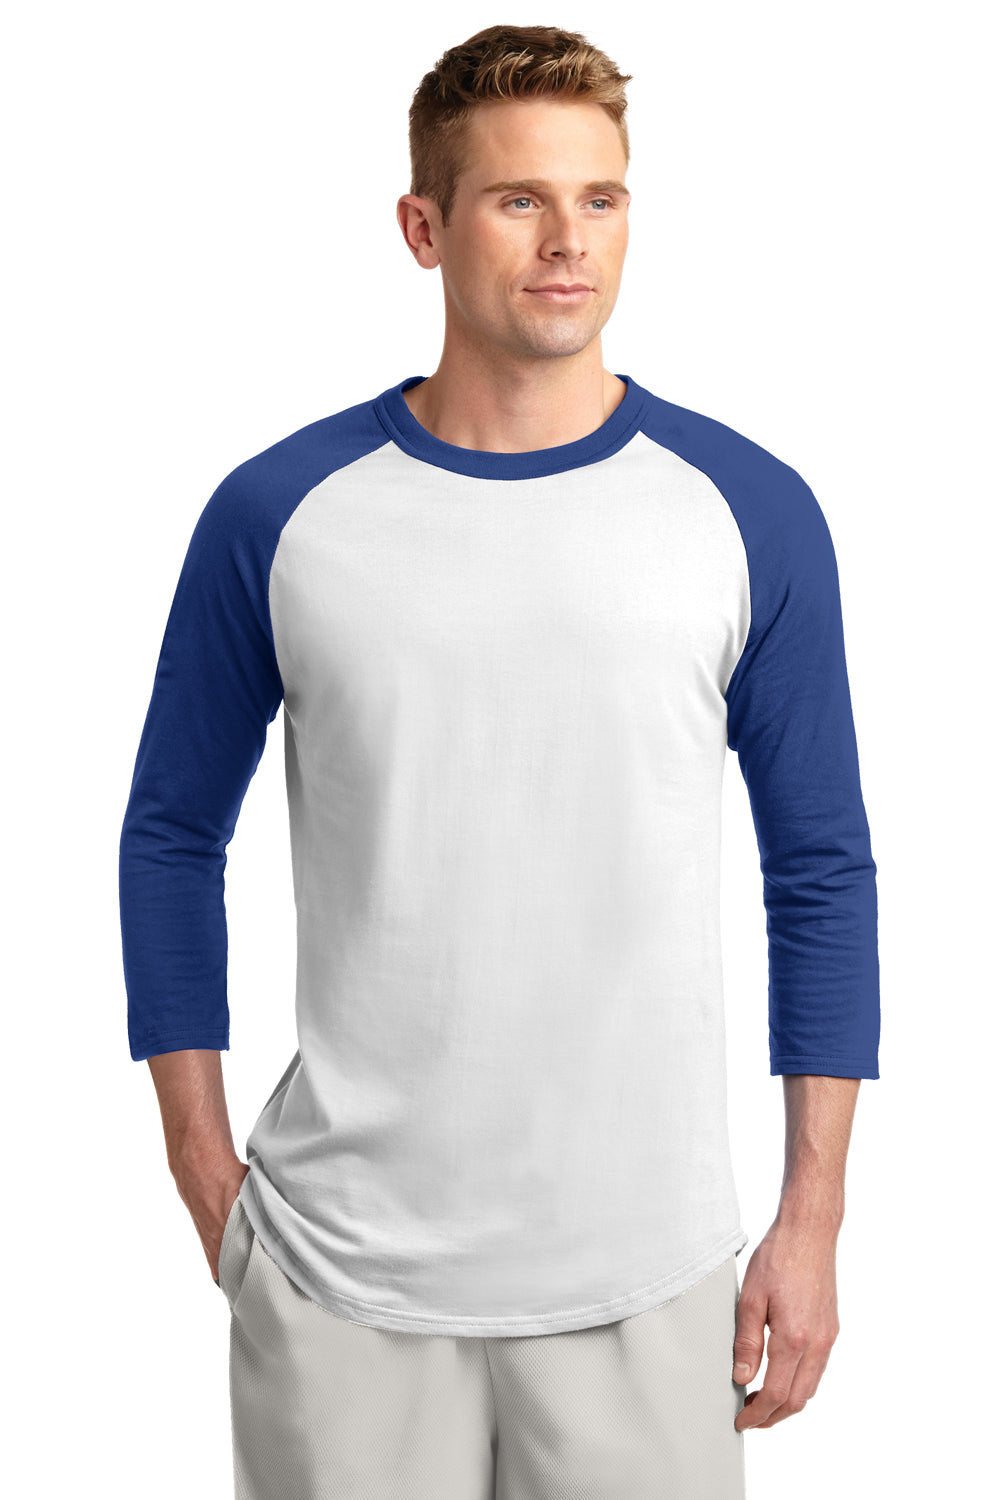 Sport-Tek T200 Mens 3/4 Sleeve Crewneck T-Shirt White/Royal Blue Front